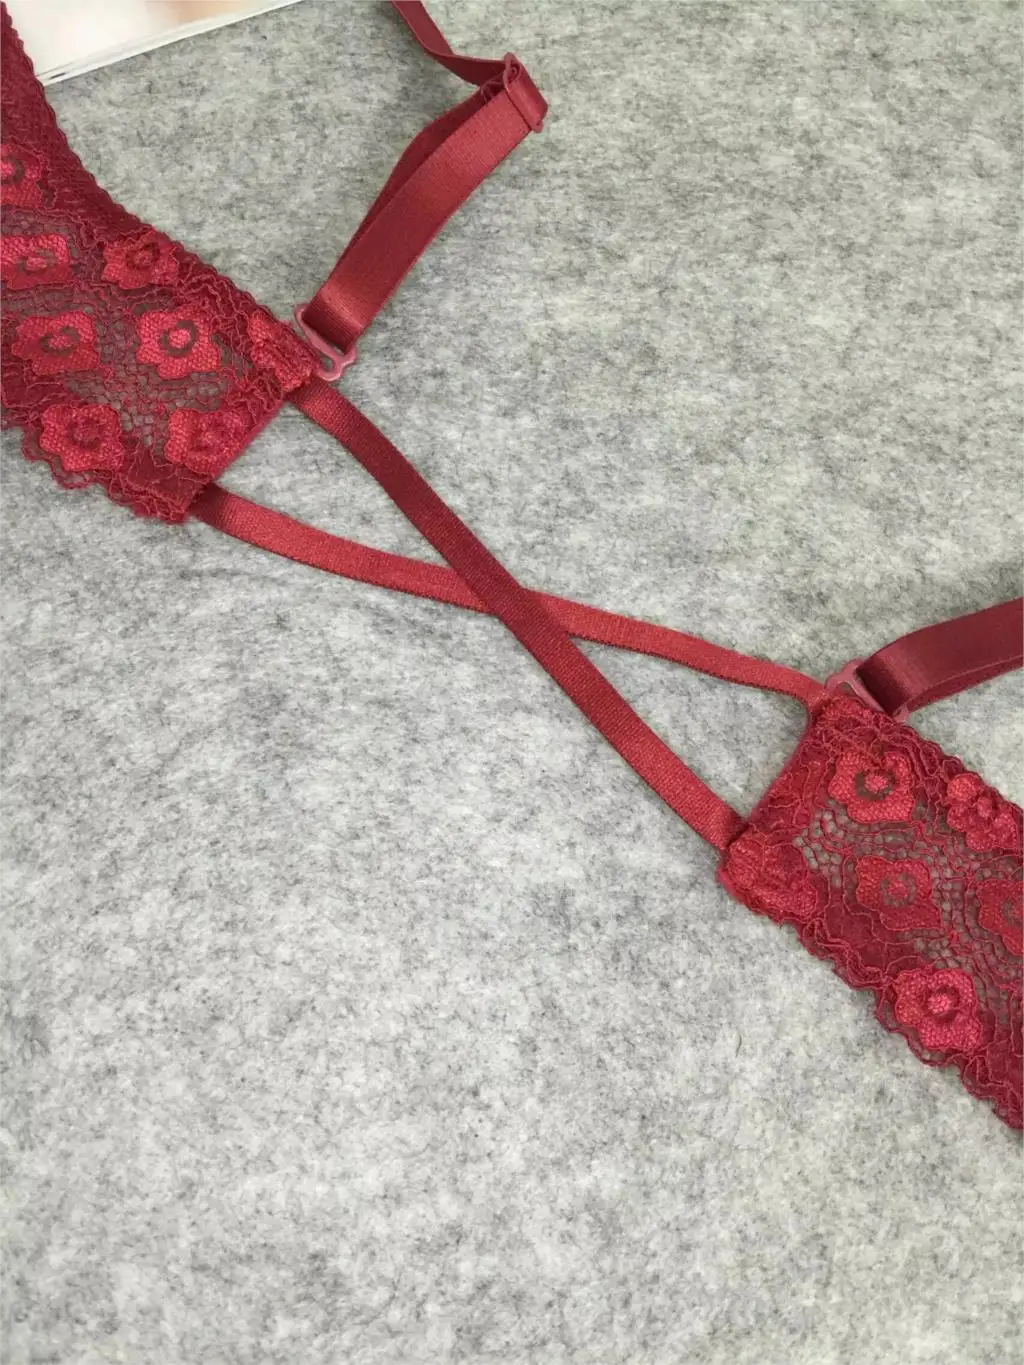 17 new fastion women bra set push up deep v front closure sexy lingerie women underwear sets 43